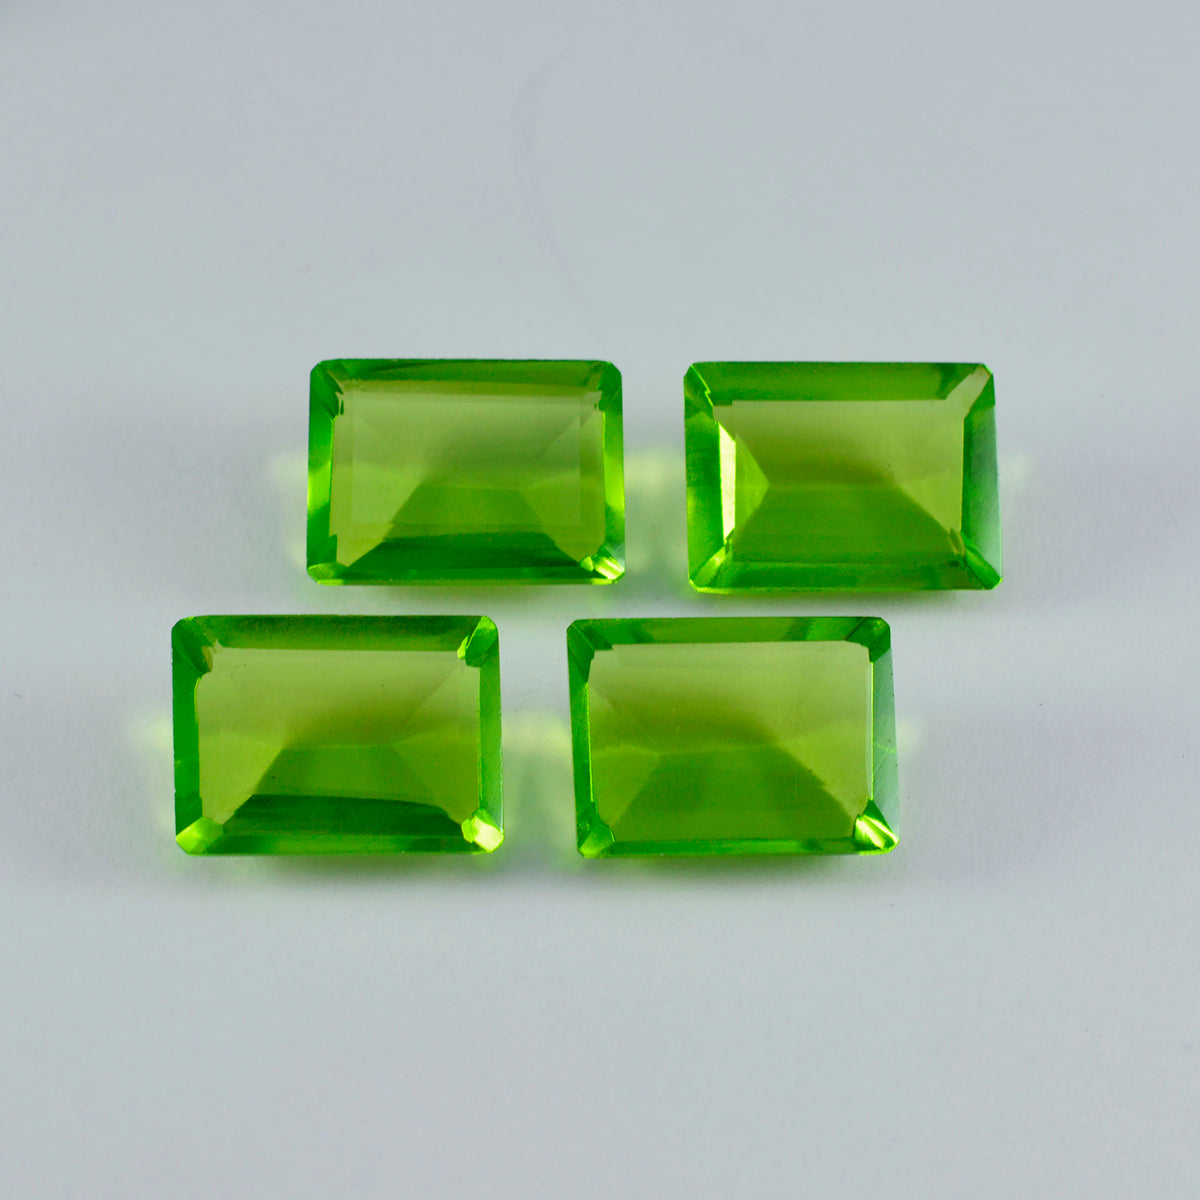 riyogems 1 st grön peridot cz fasetterad 12x16 mm oktagonform fantastisk kvalitetspärla